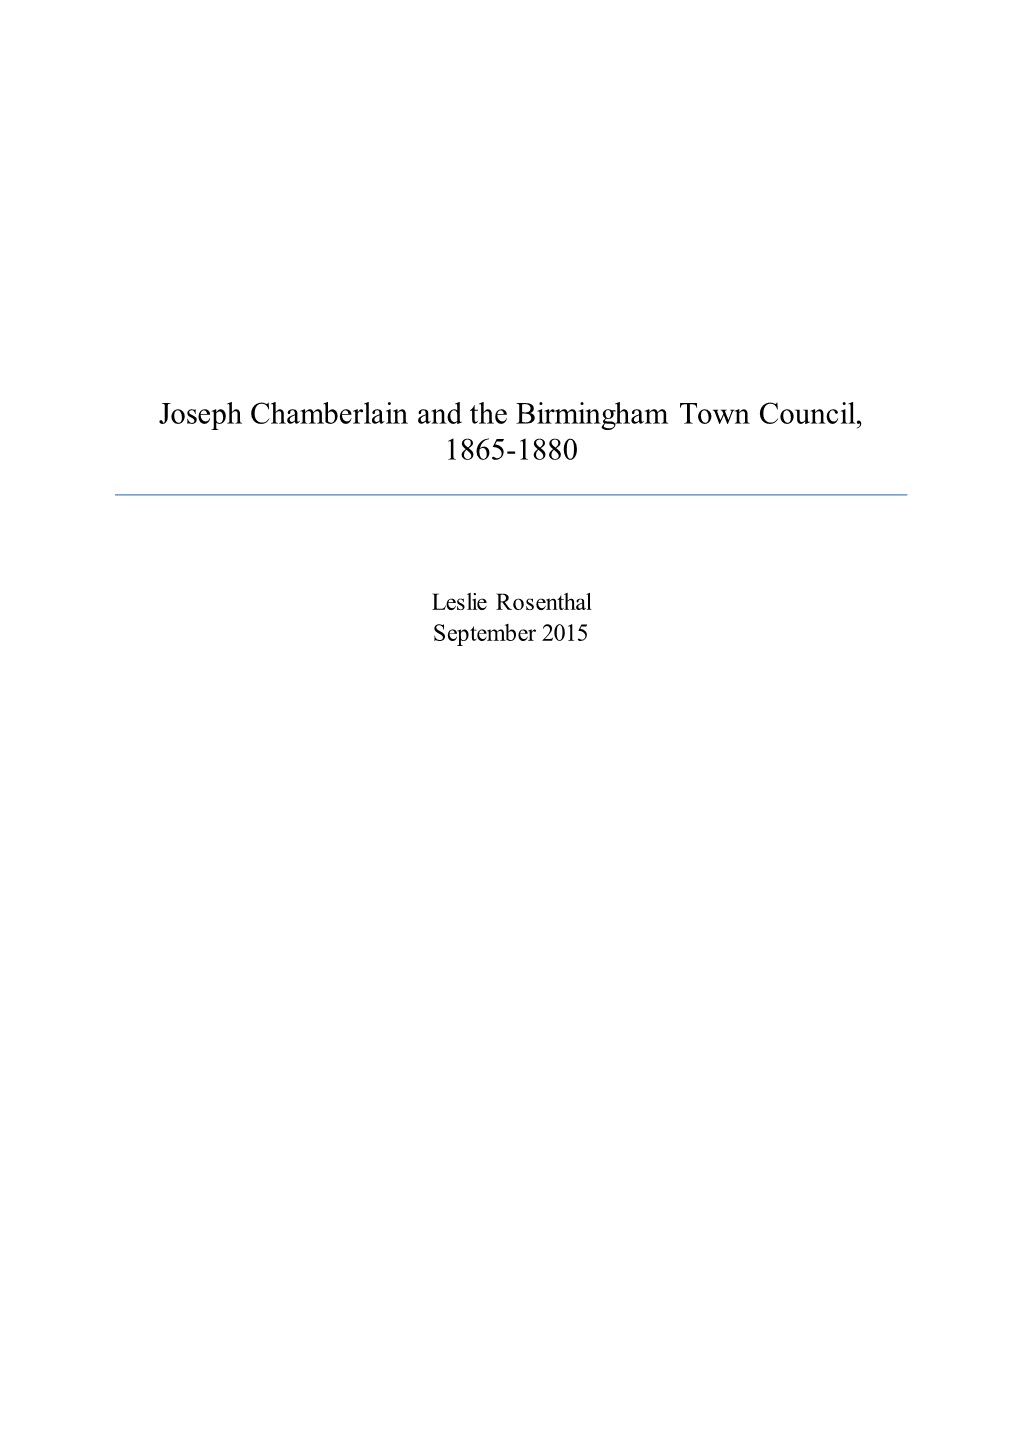 Joseph Chamberlain and the Birmingham Town Council, 1865-1880